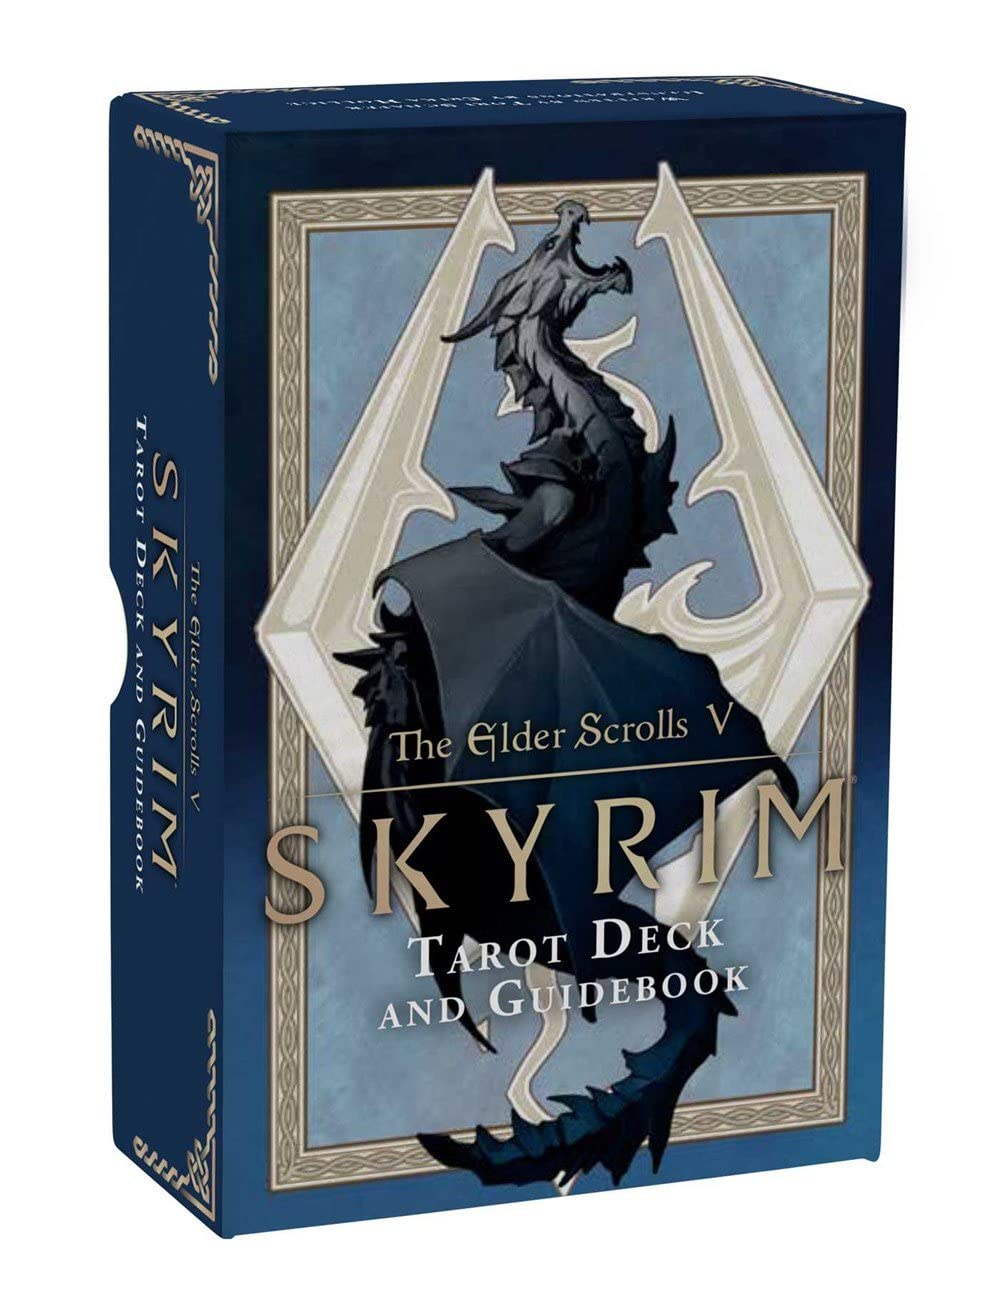 The Elder Scrolls V: Skyrim Tarot Deck and Guidebook (Novelty Book)